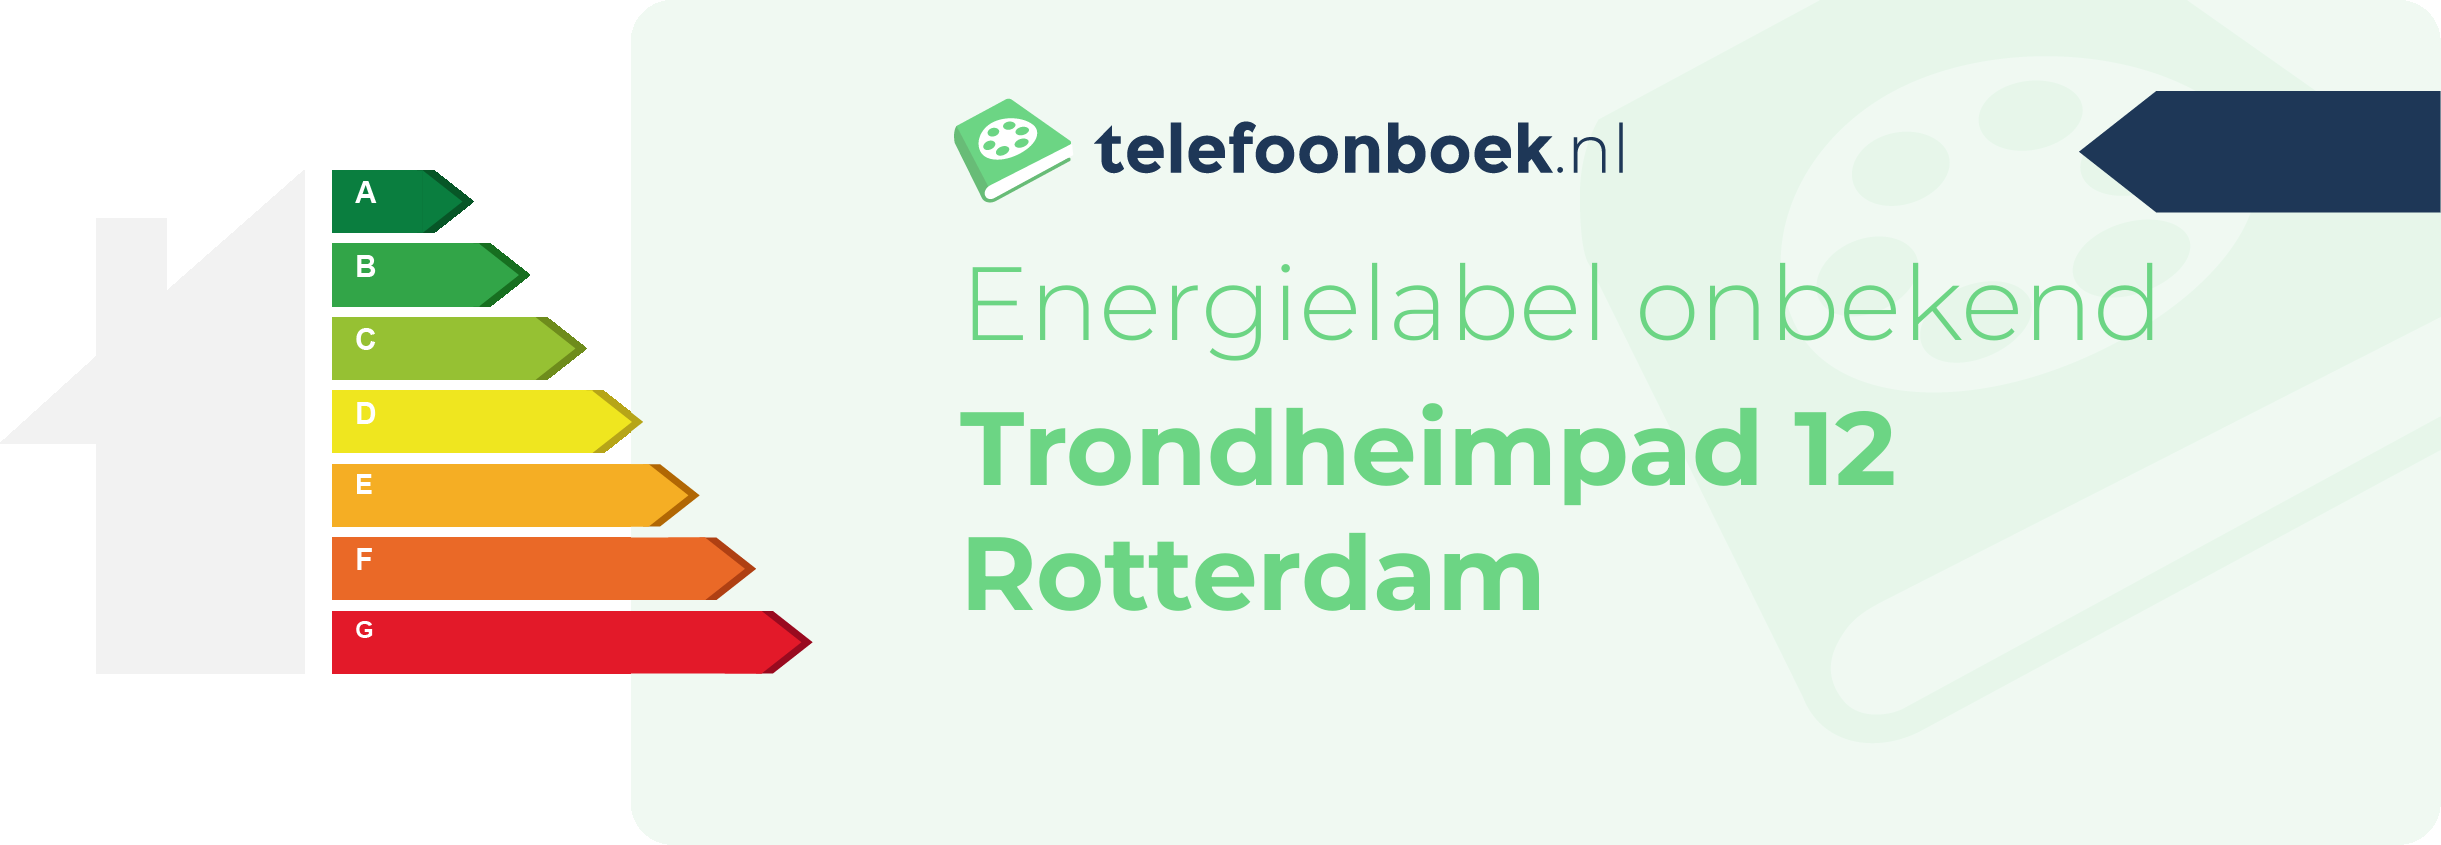 Energielabel Trondheimpad 12 Rotterdam